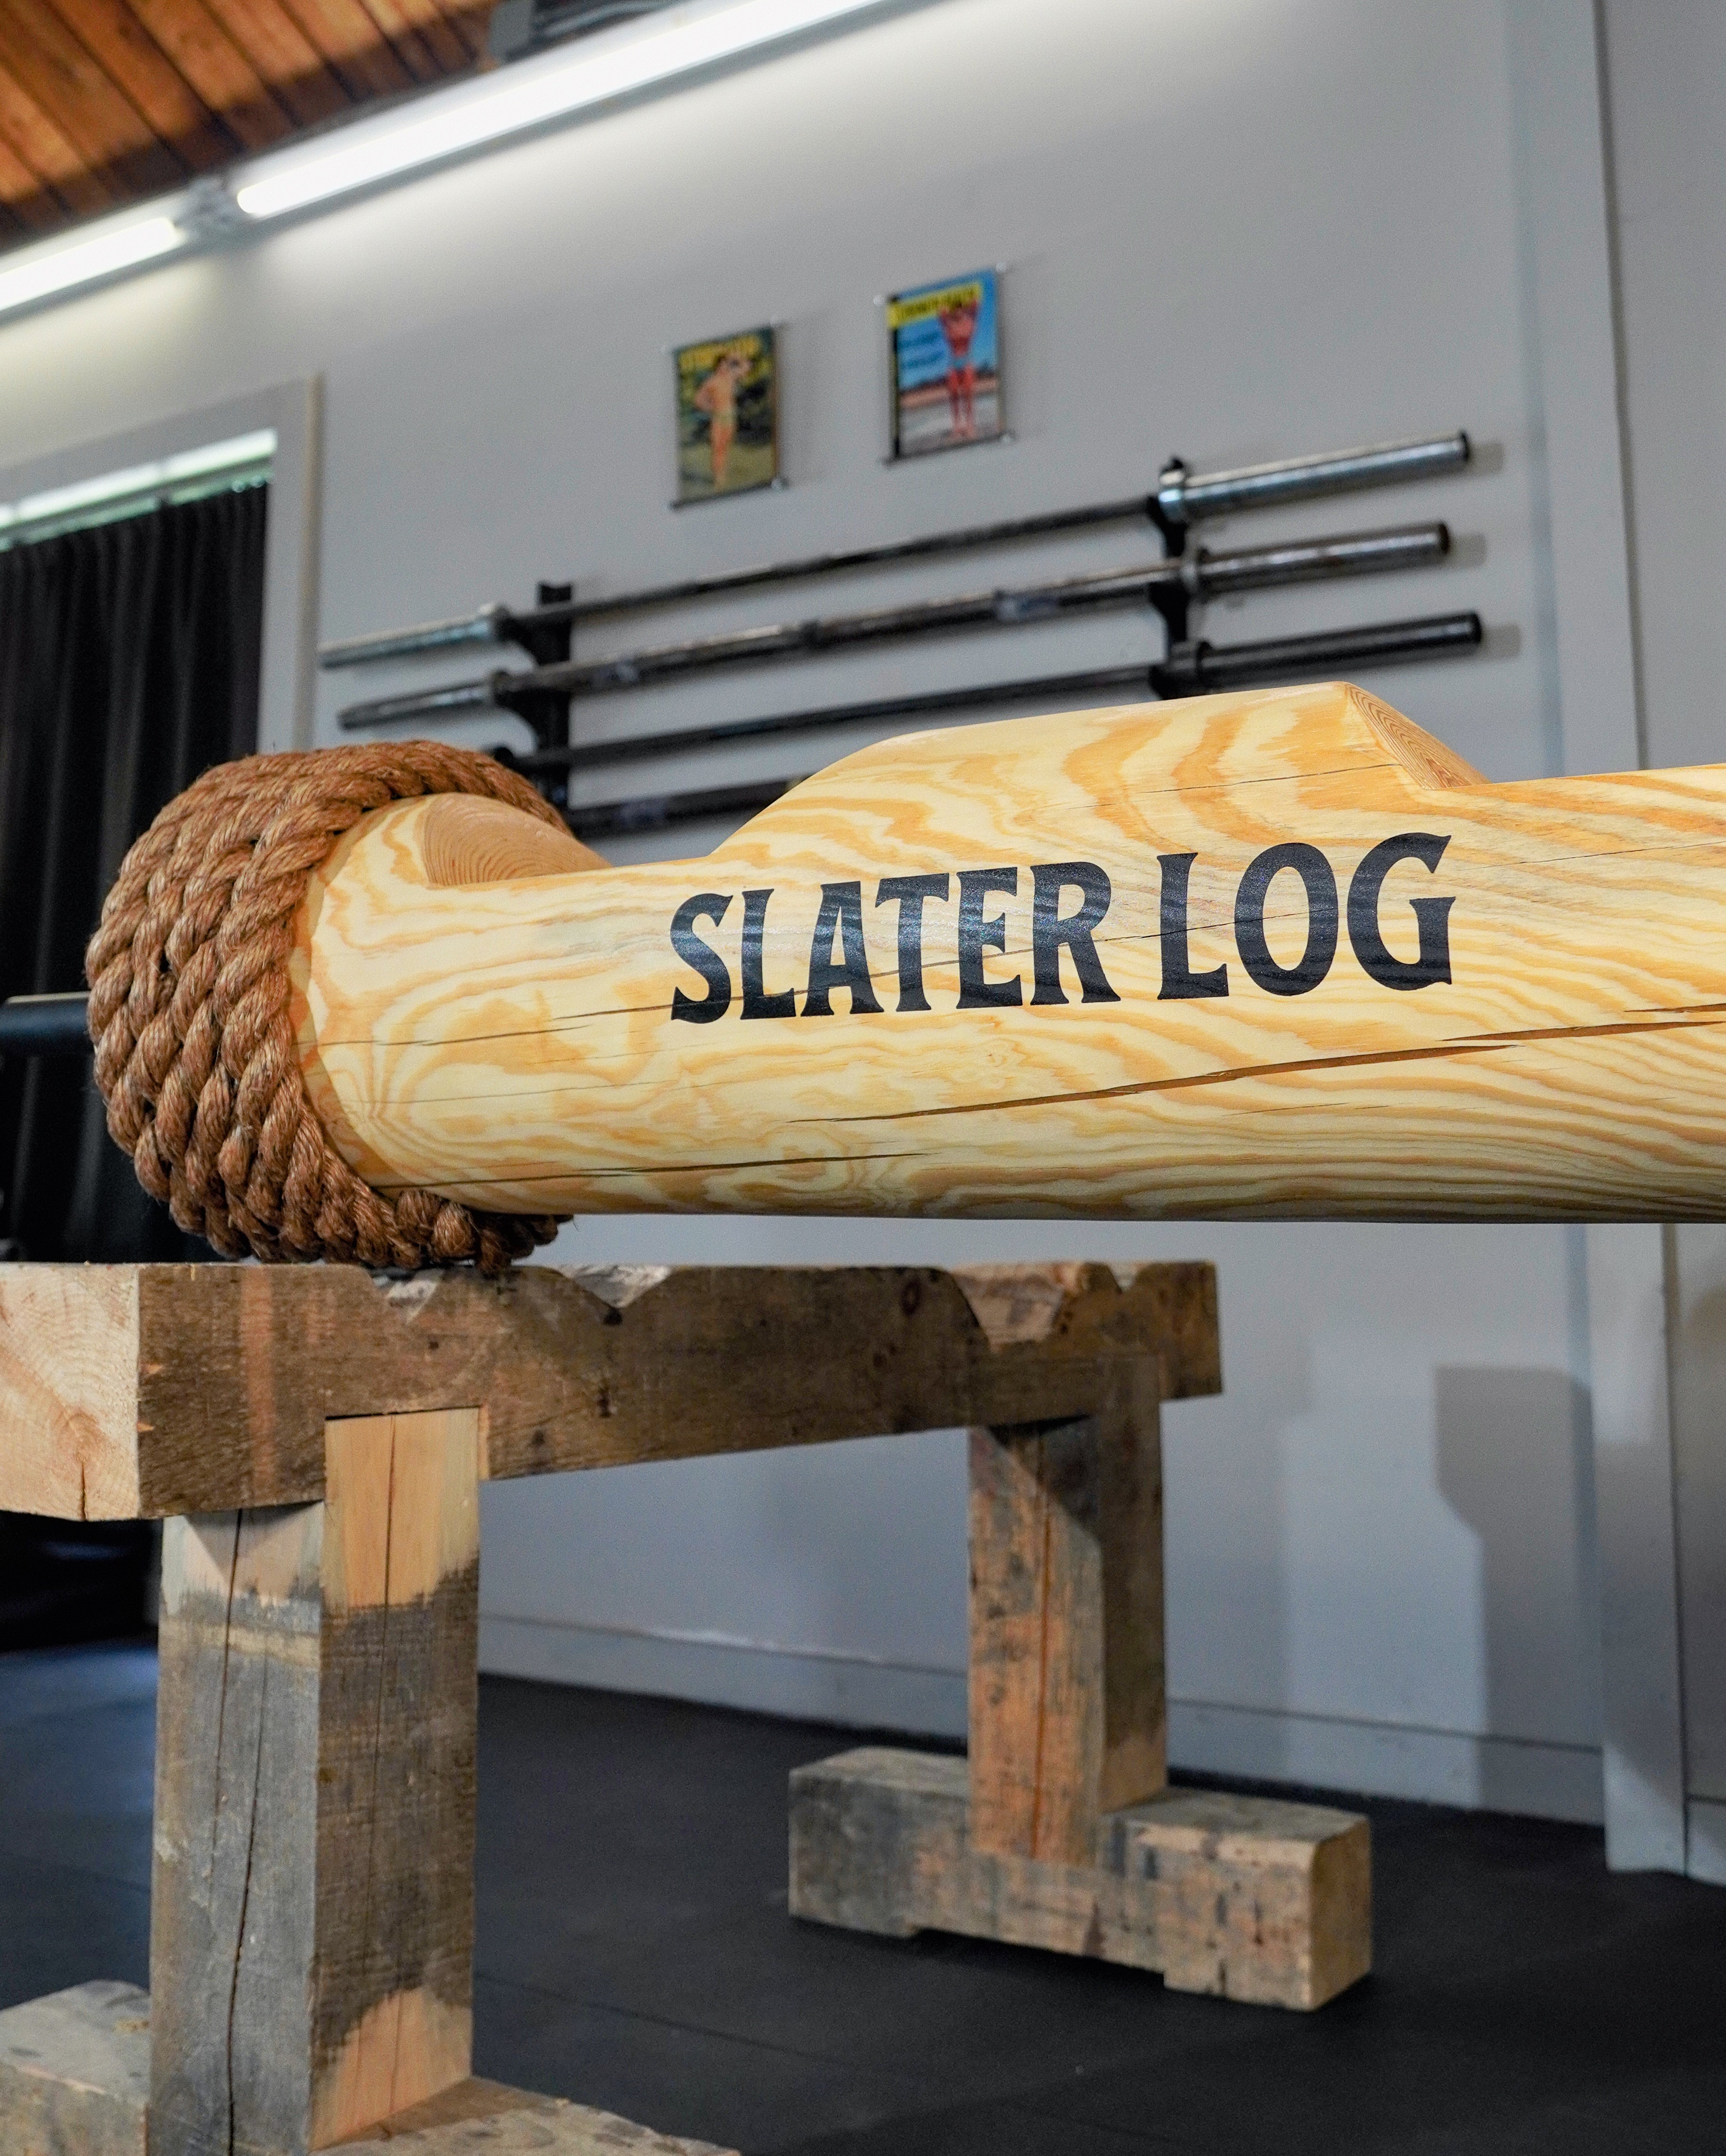 12" x 5' Slater True Log